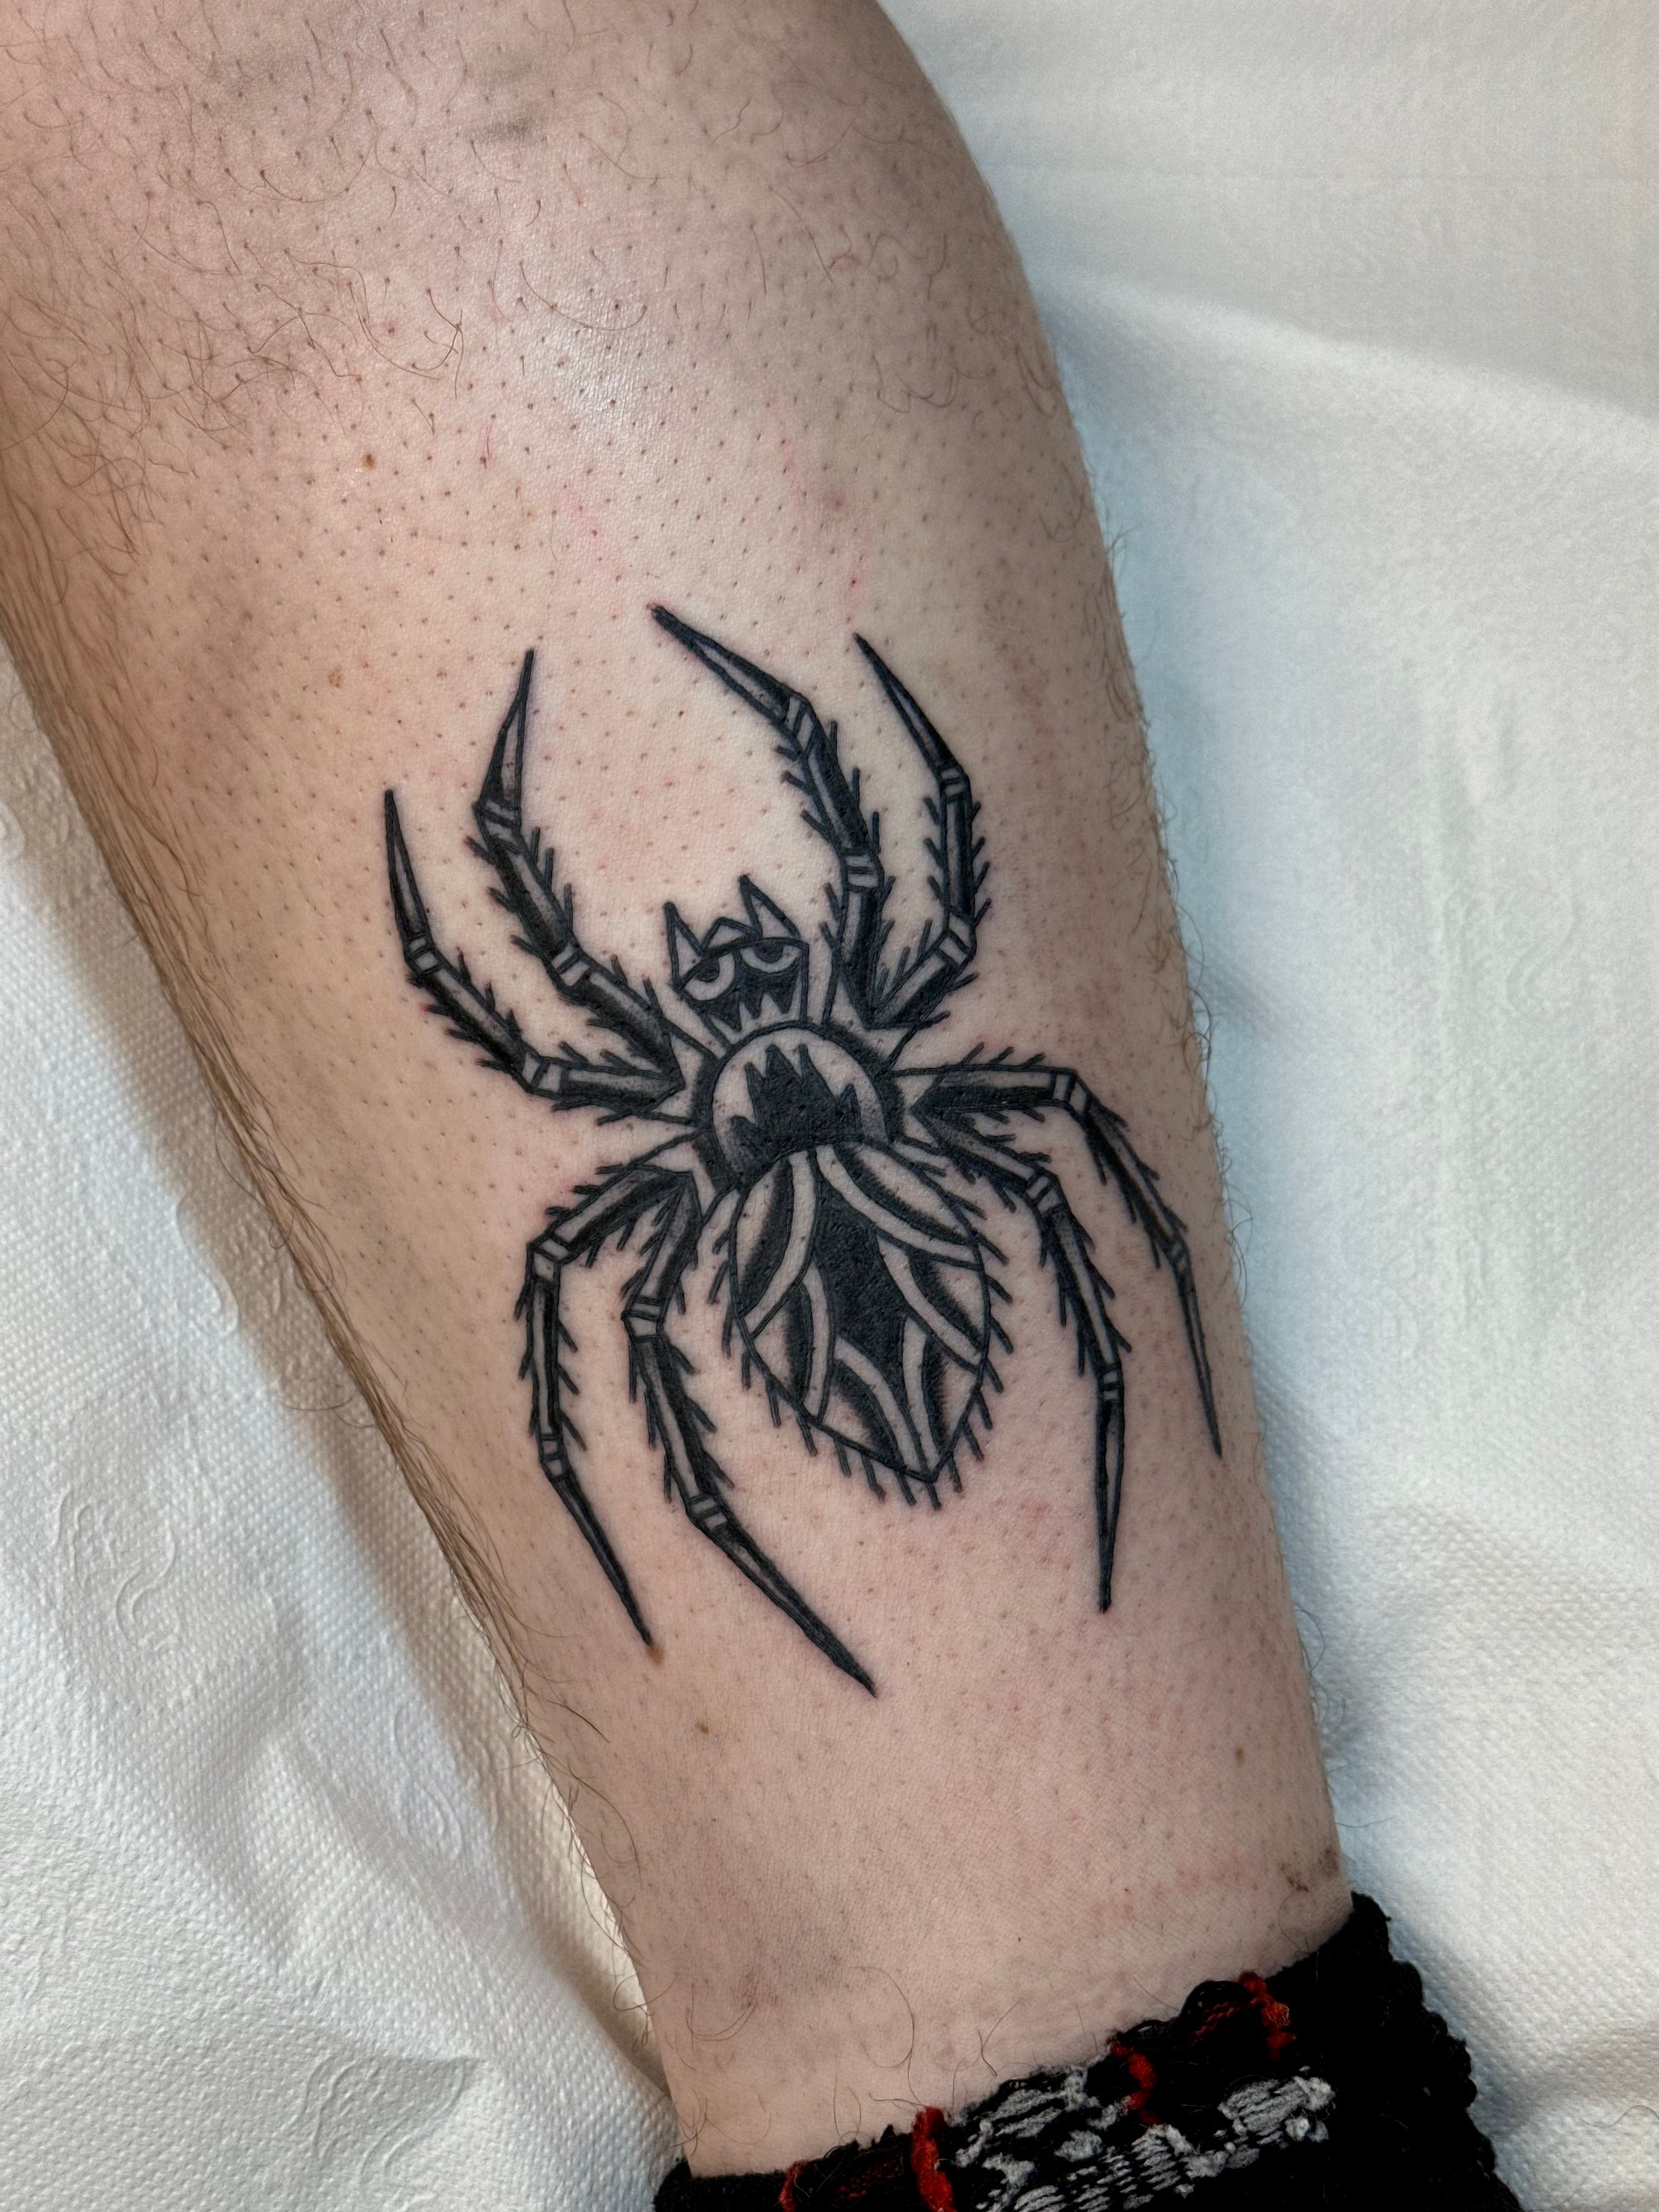 Best Spider Tattoo Designs – Our Top 11